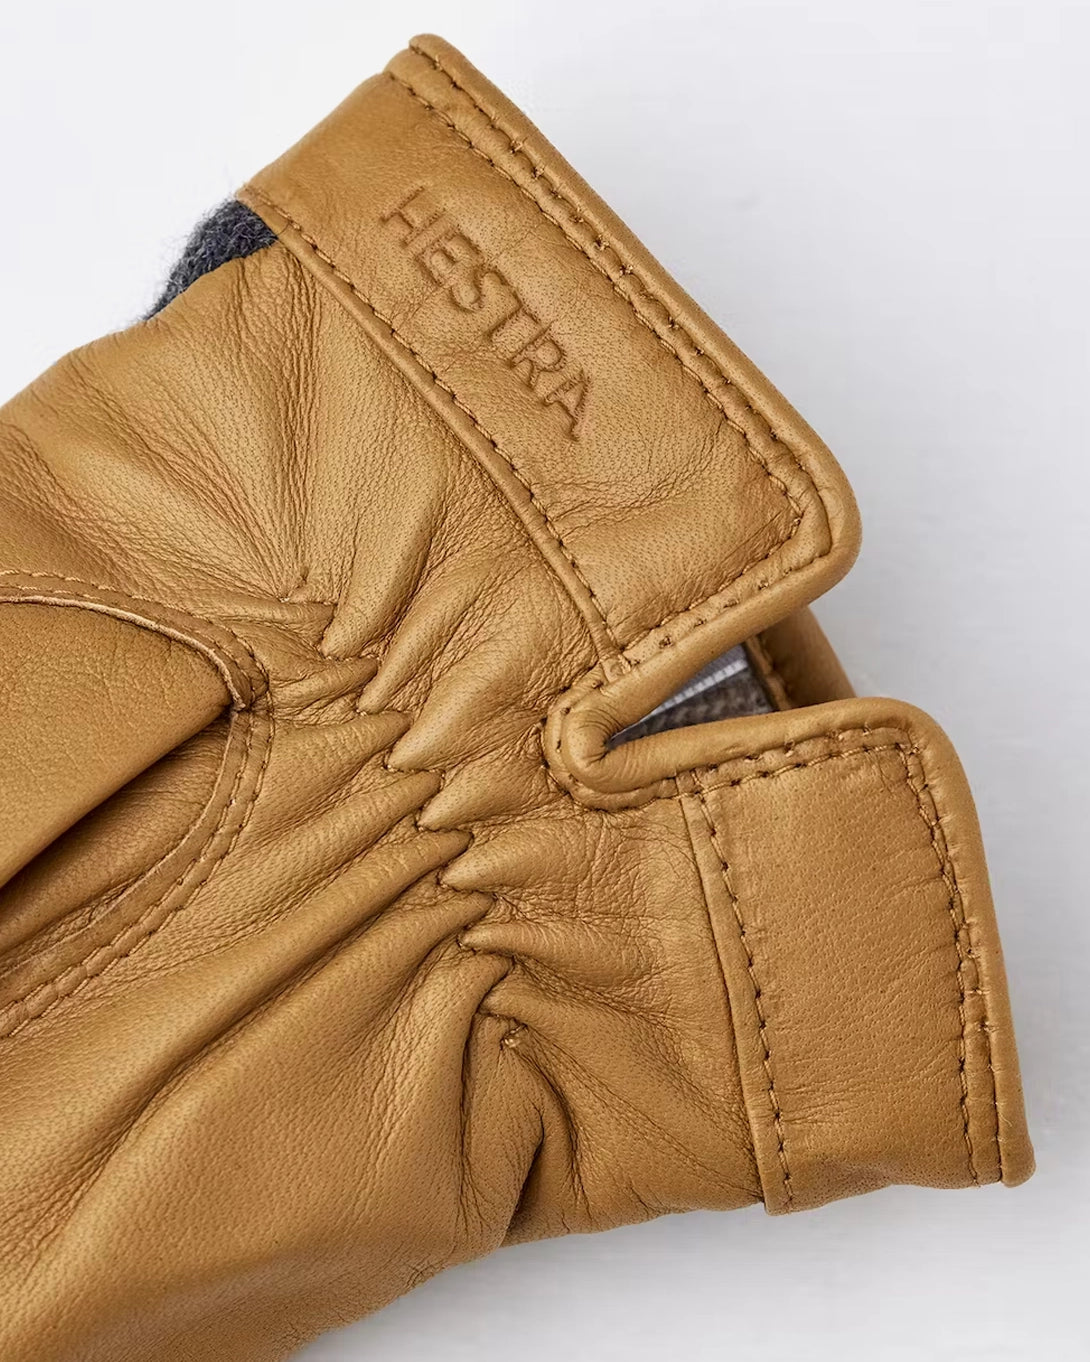 Charcoal/Camel Saga Hestra Fashion Winter Gloves